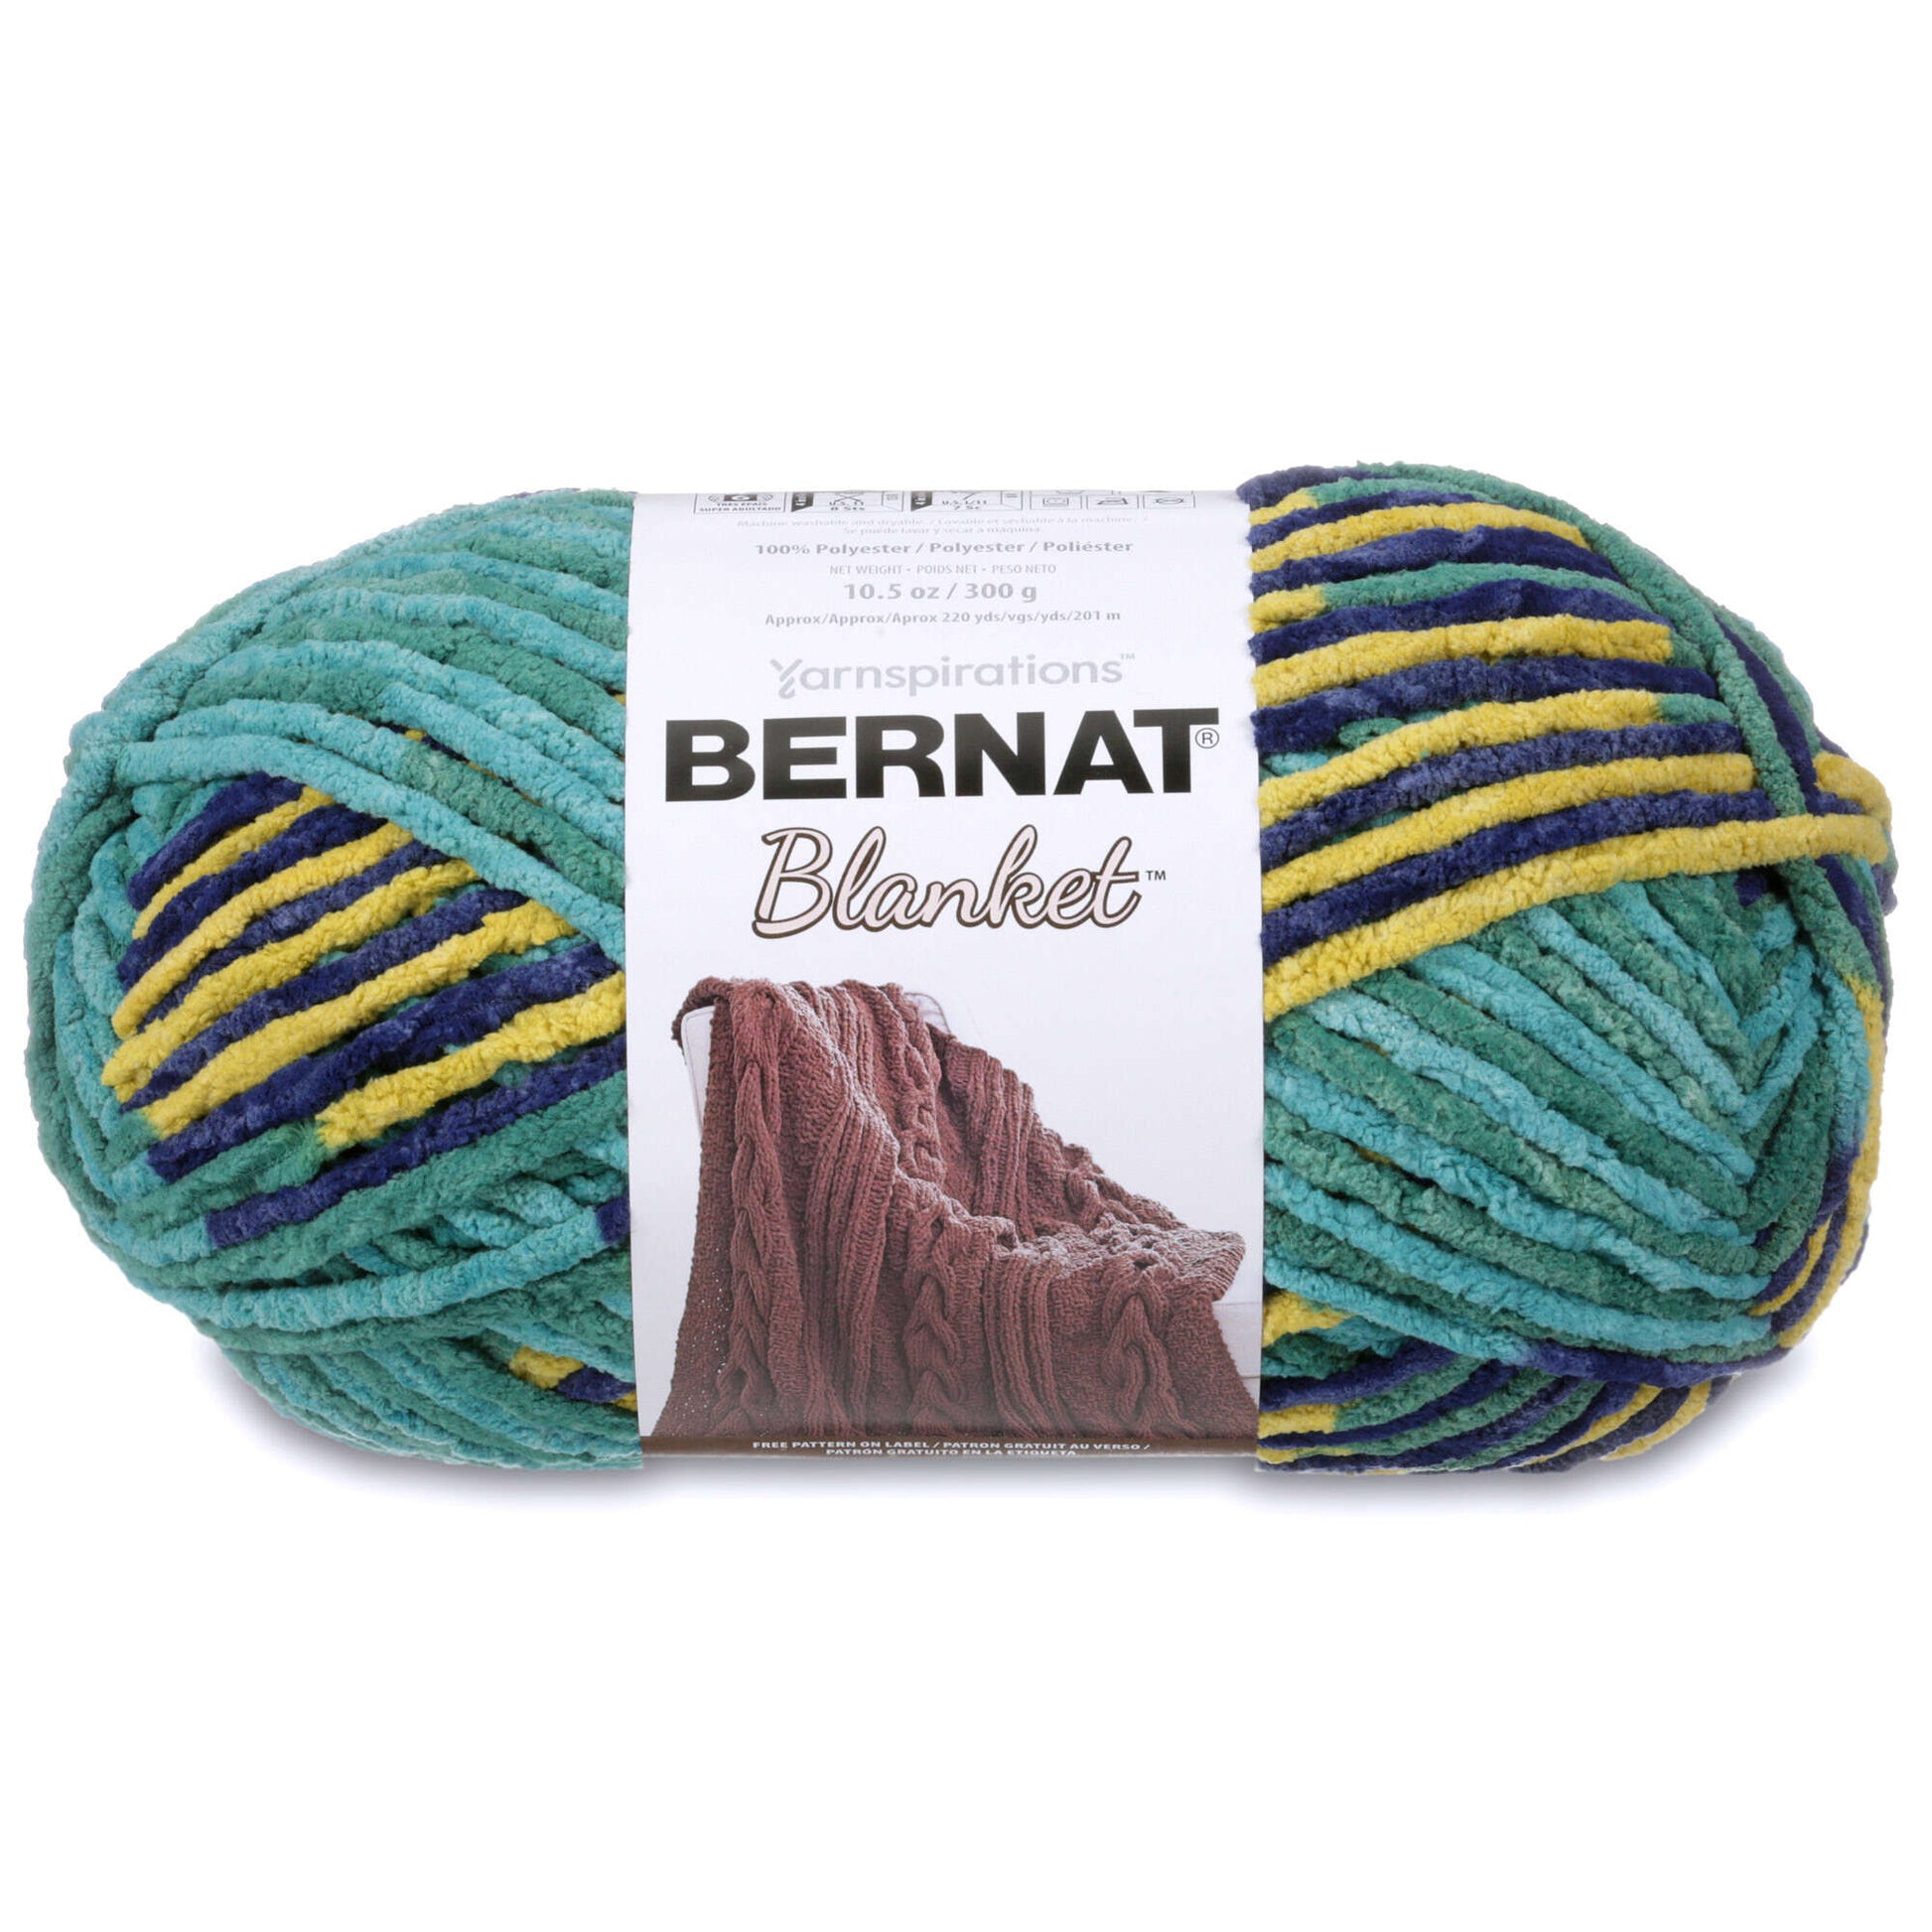 Bernat Blanket Yarn (300g/10.5oz) Dorset